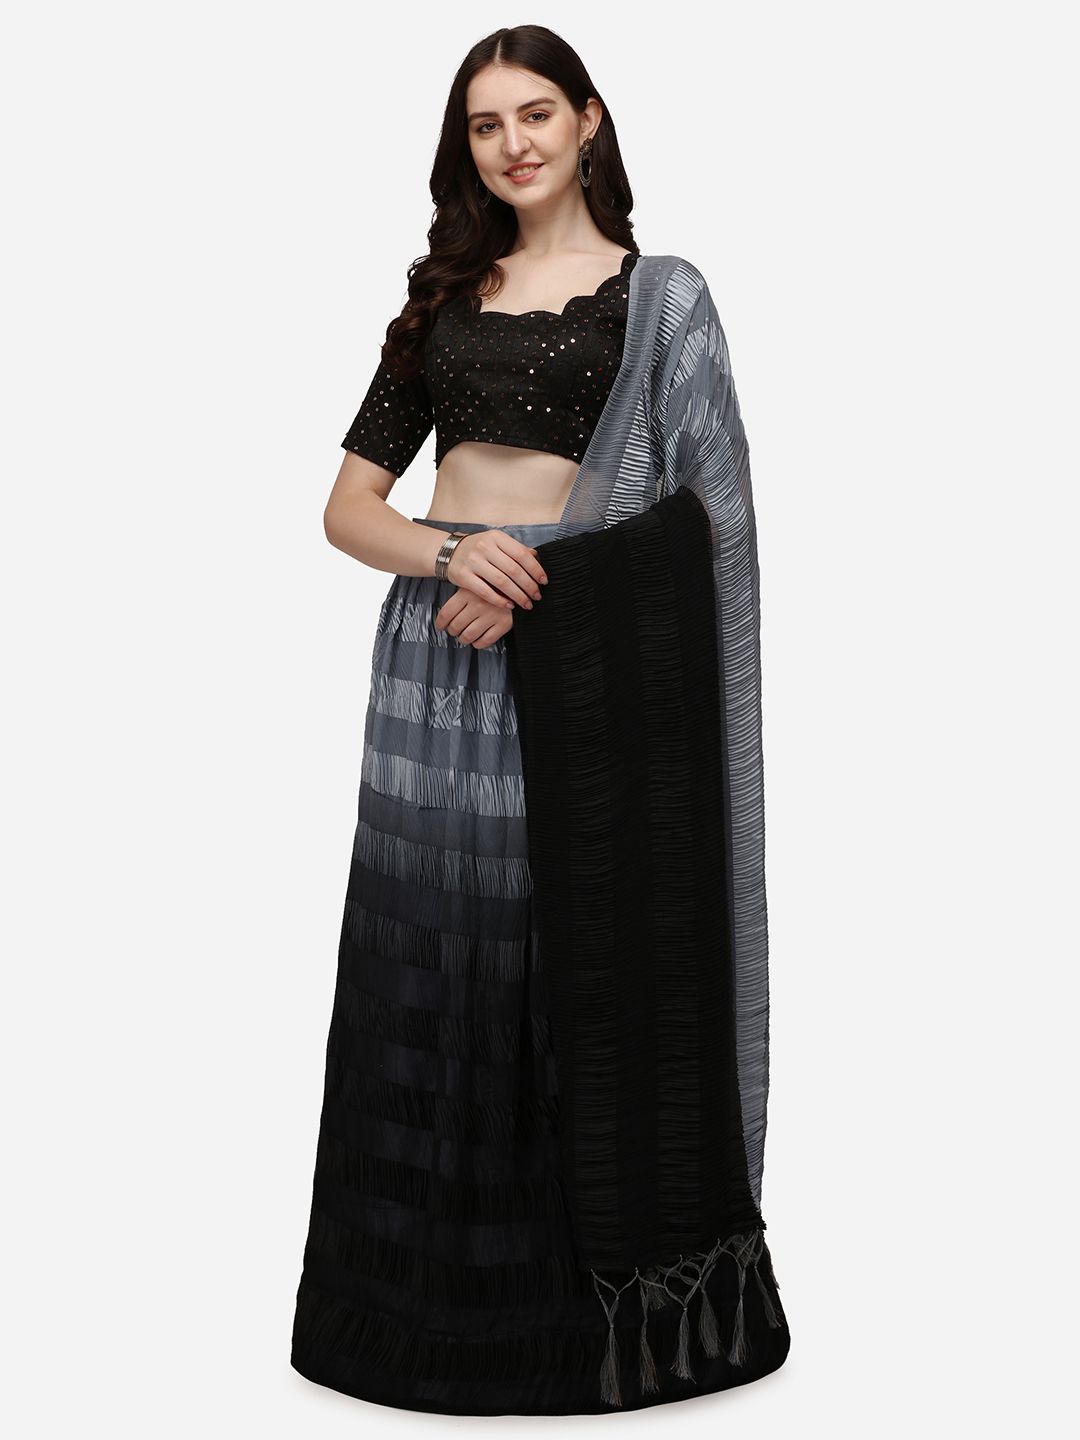 Pratham Blue Grey & Black Embellished Semi-Stitched Lehenga & Unstitched Blouse With Dupatta Price in India